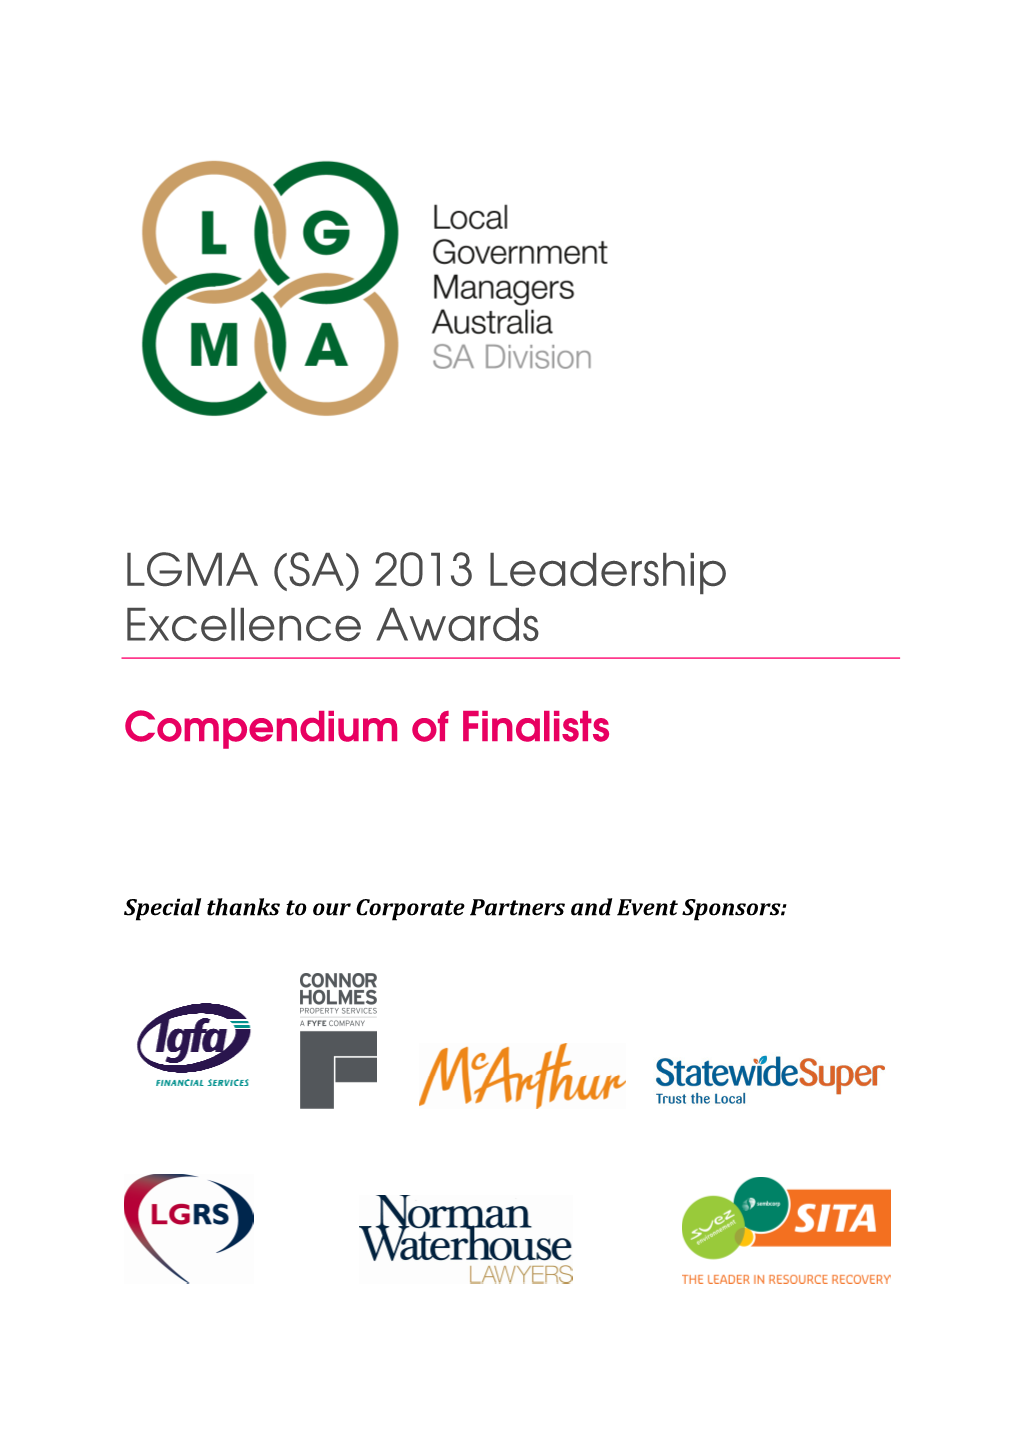 LGMA (SA) 2013 Leadership Excellence Awards